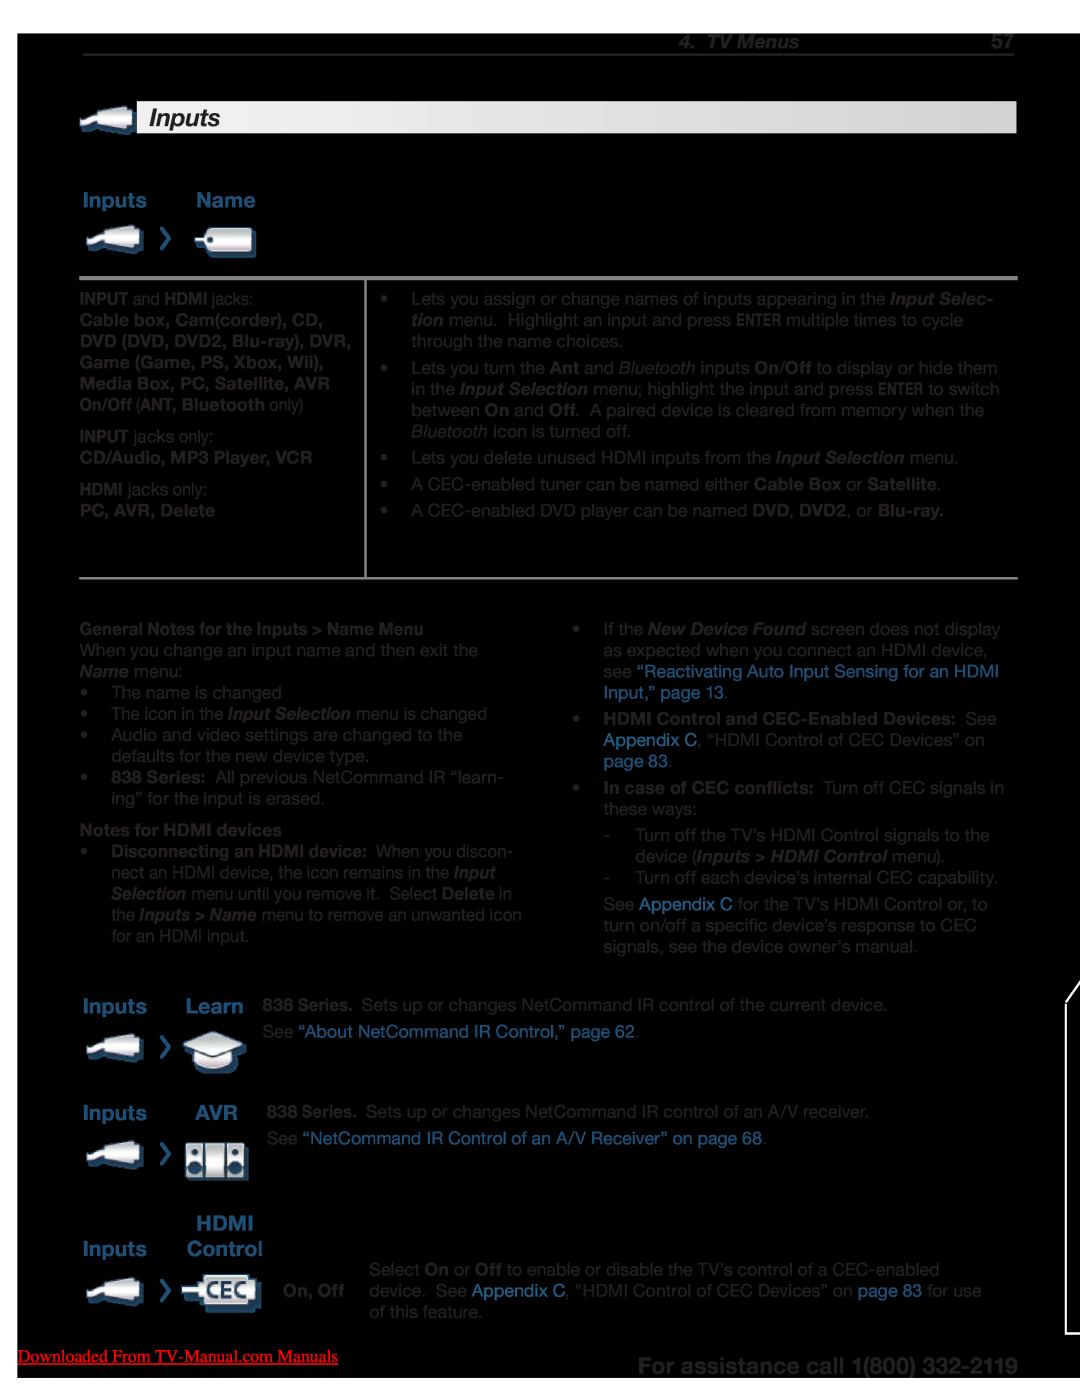 Mitsumi electronic 738 Series, 838 Series manual For assistance call 1800, Inputs Name, HDMI Inputs Control, TV Menus 